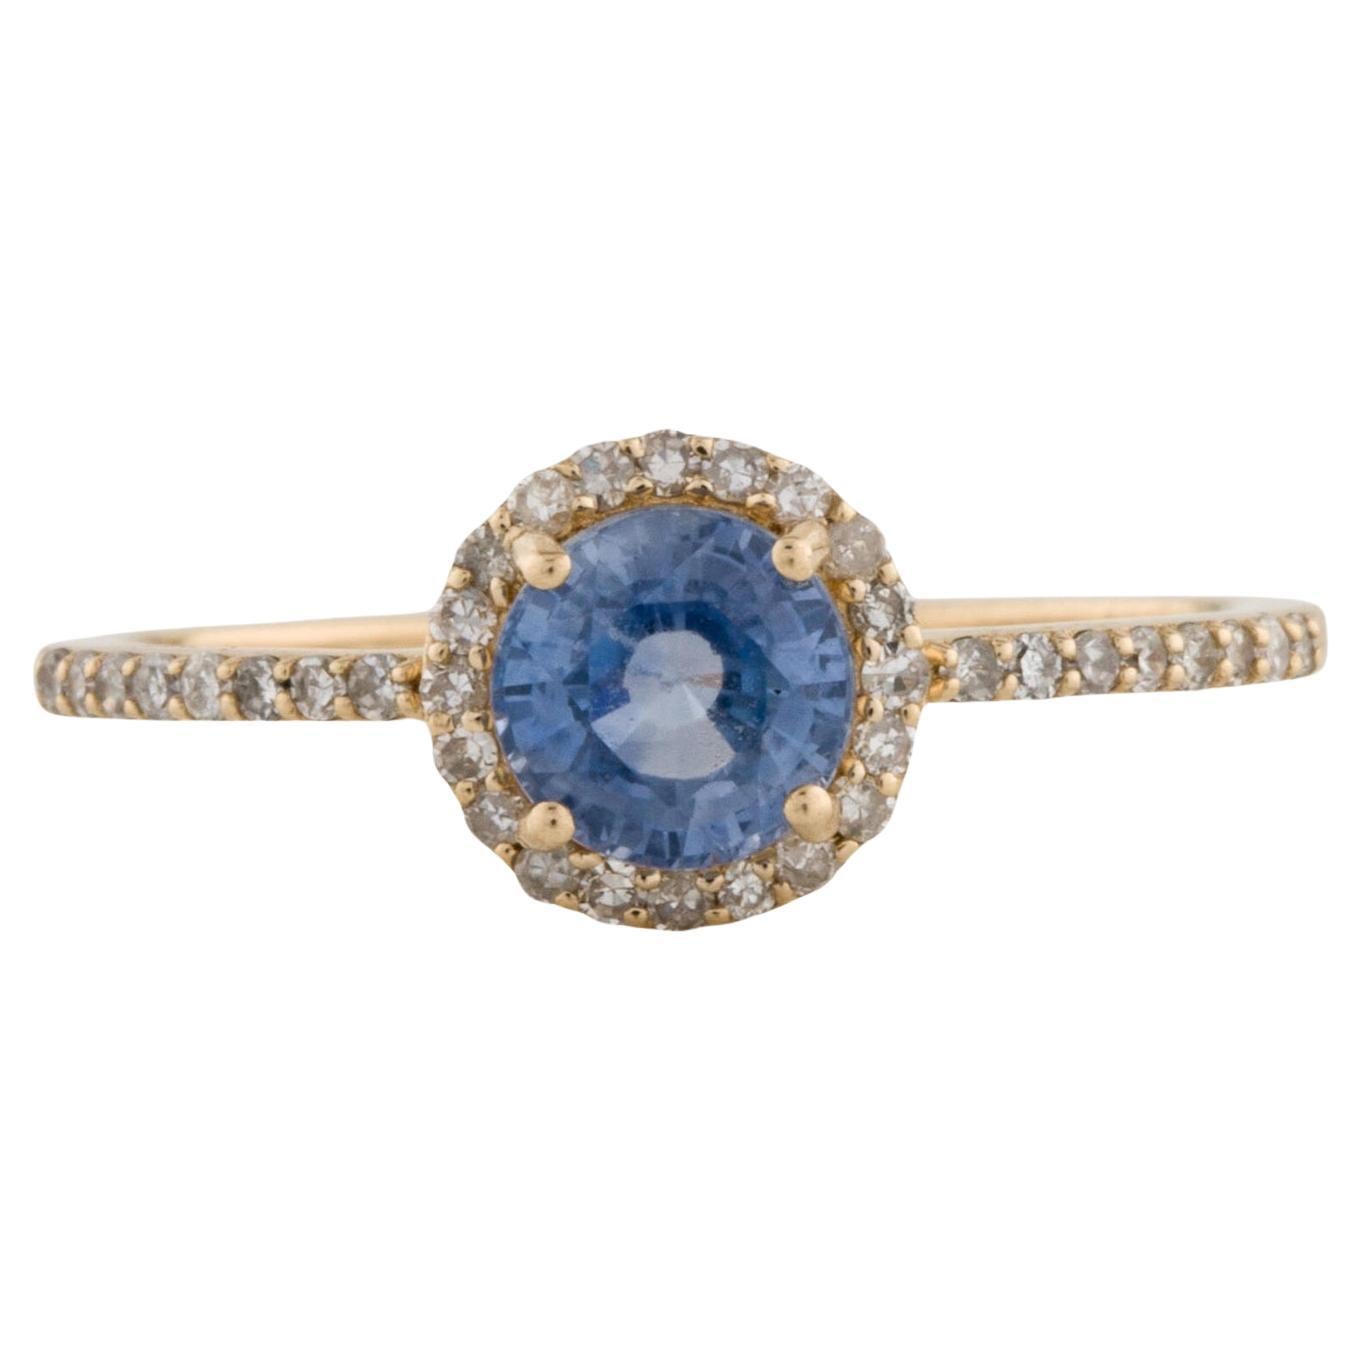 14K Sapphire & Diamond Cocktail Ring - Size 6.75 - Elegant Statement Jewelry